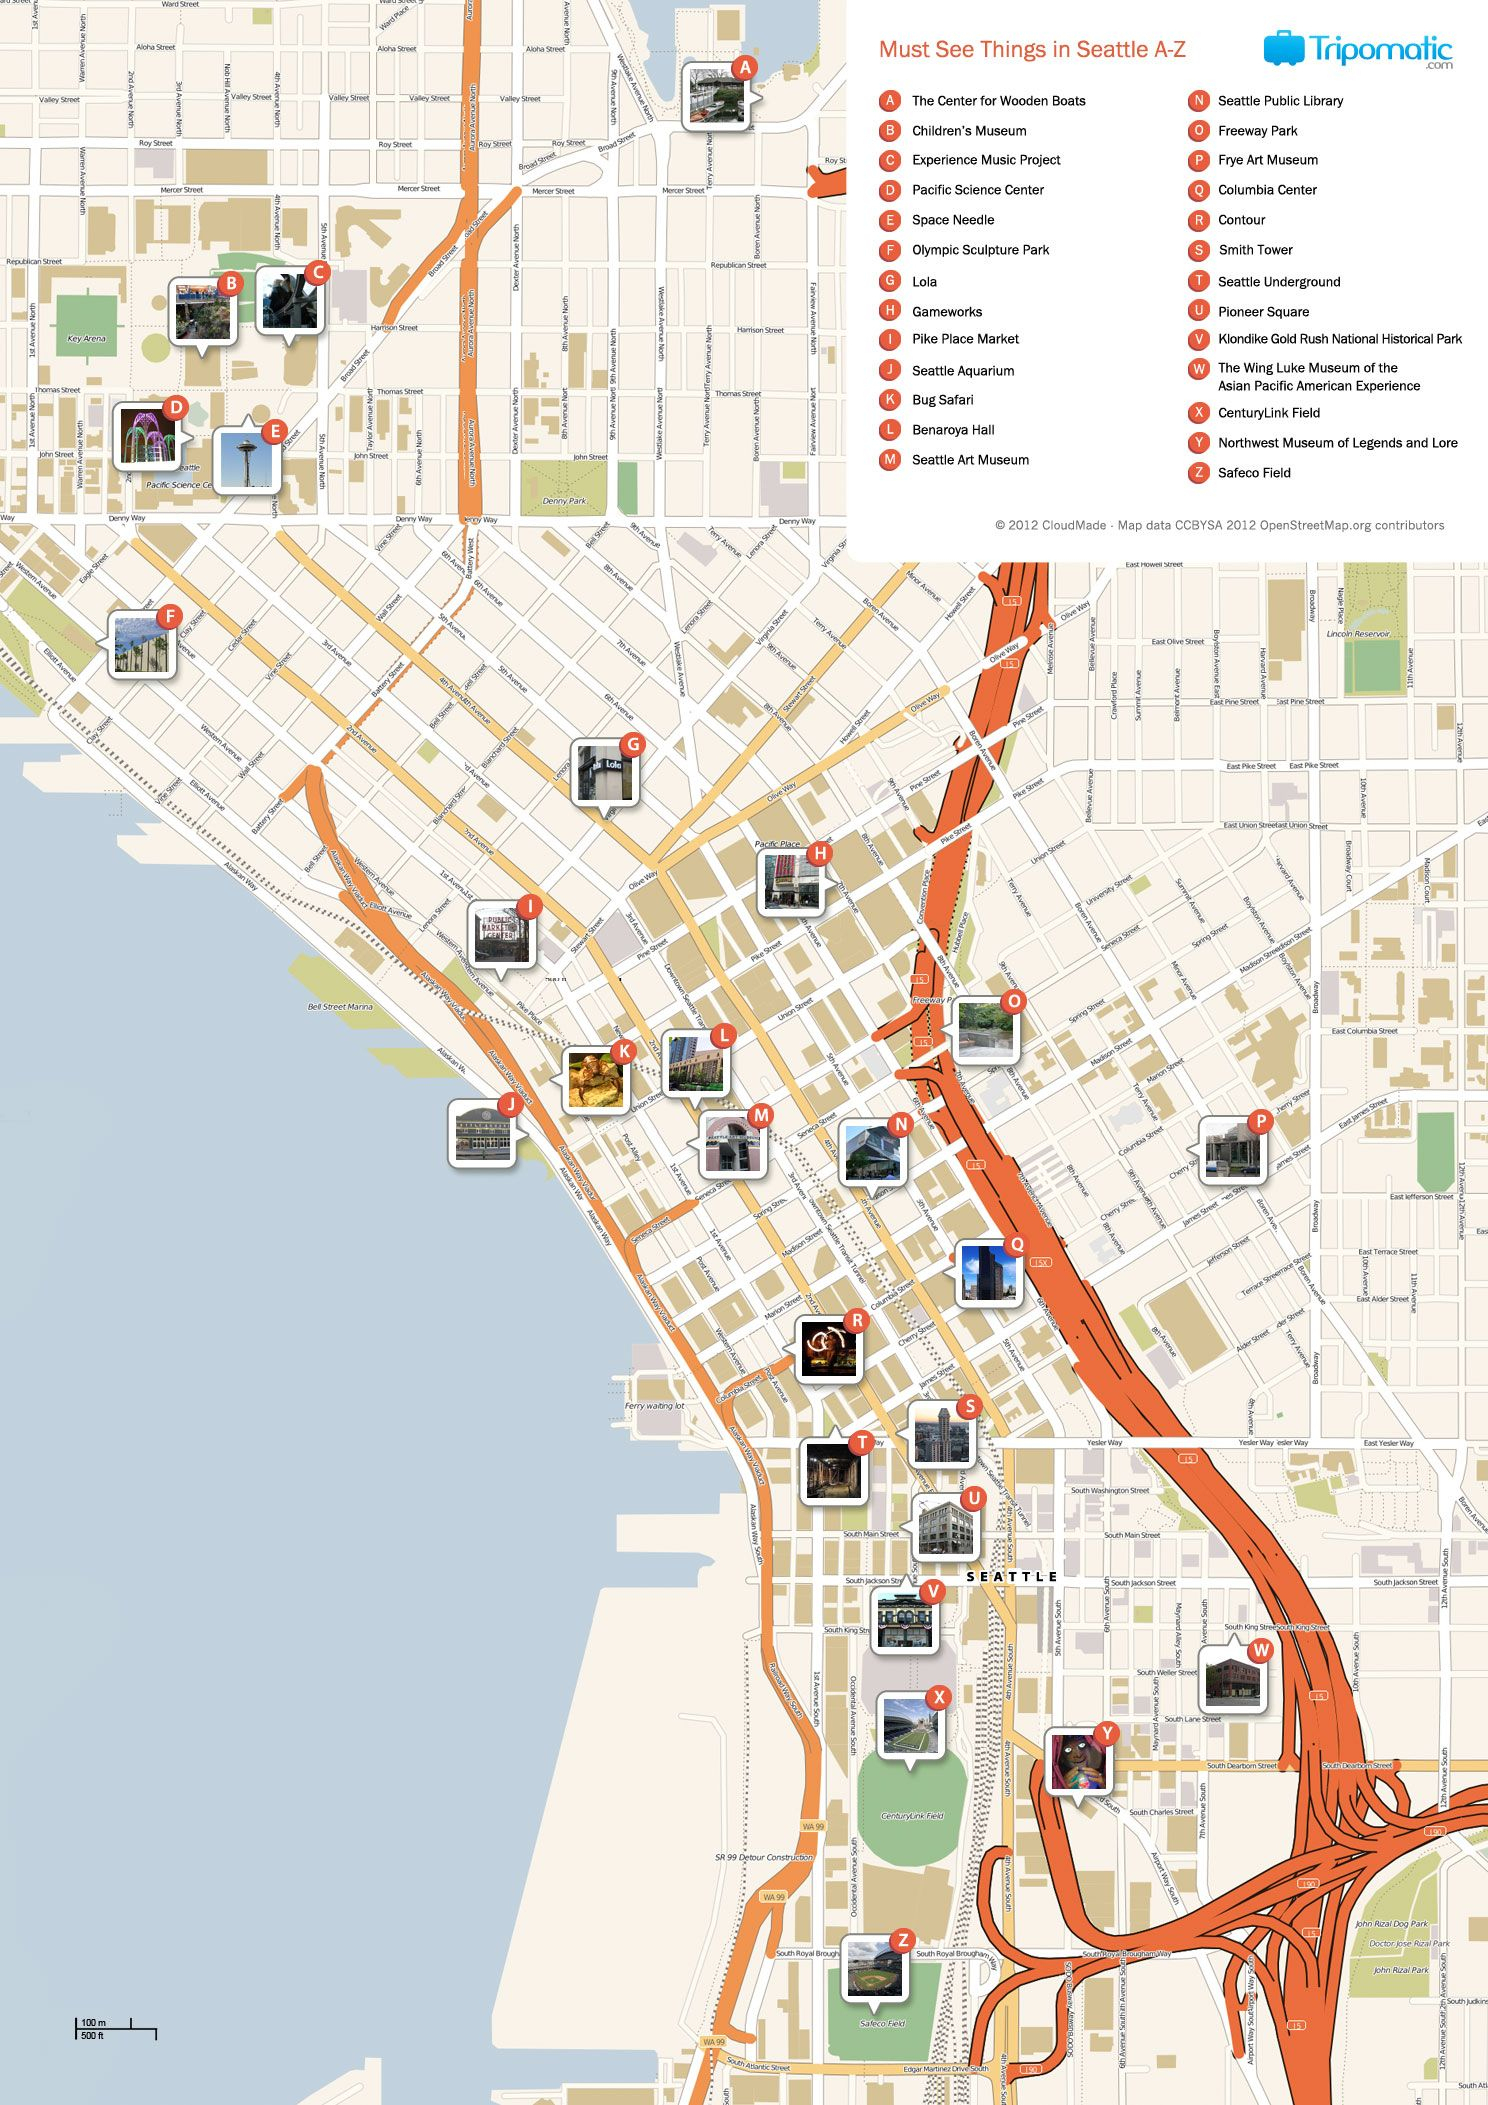 Seattle Printable Tourist Map | Free Tourist Maps ✈ | Pinterest - Printable Map Of Downtown Seattle